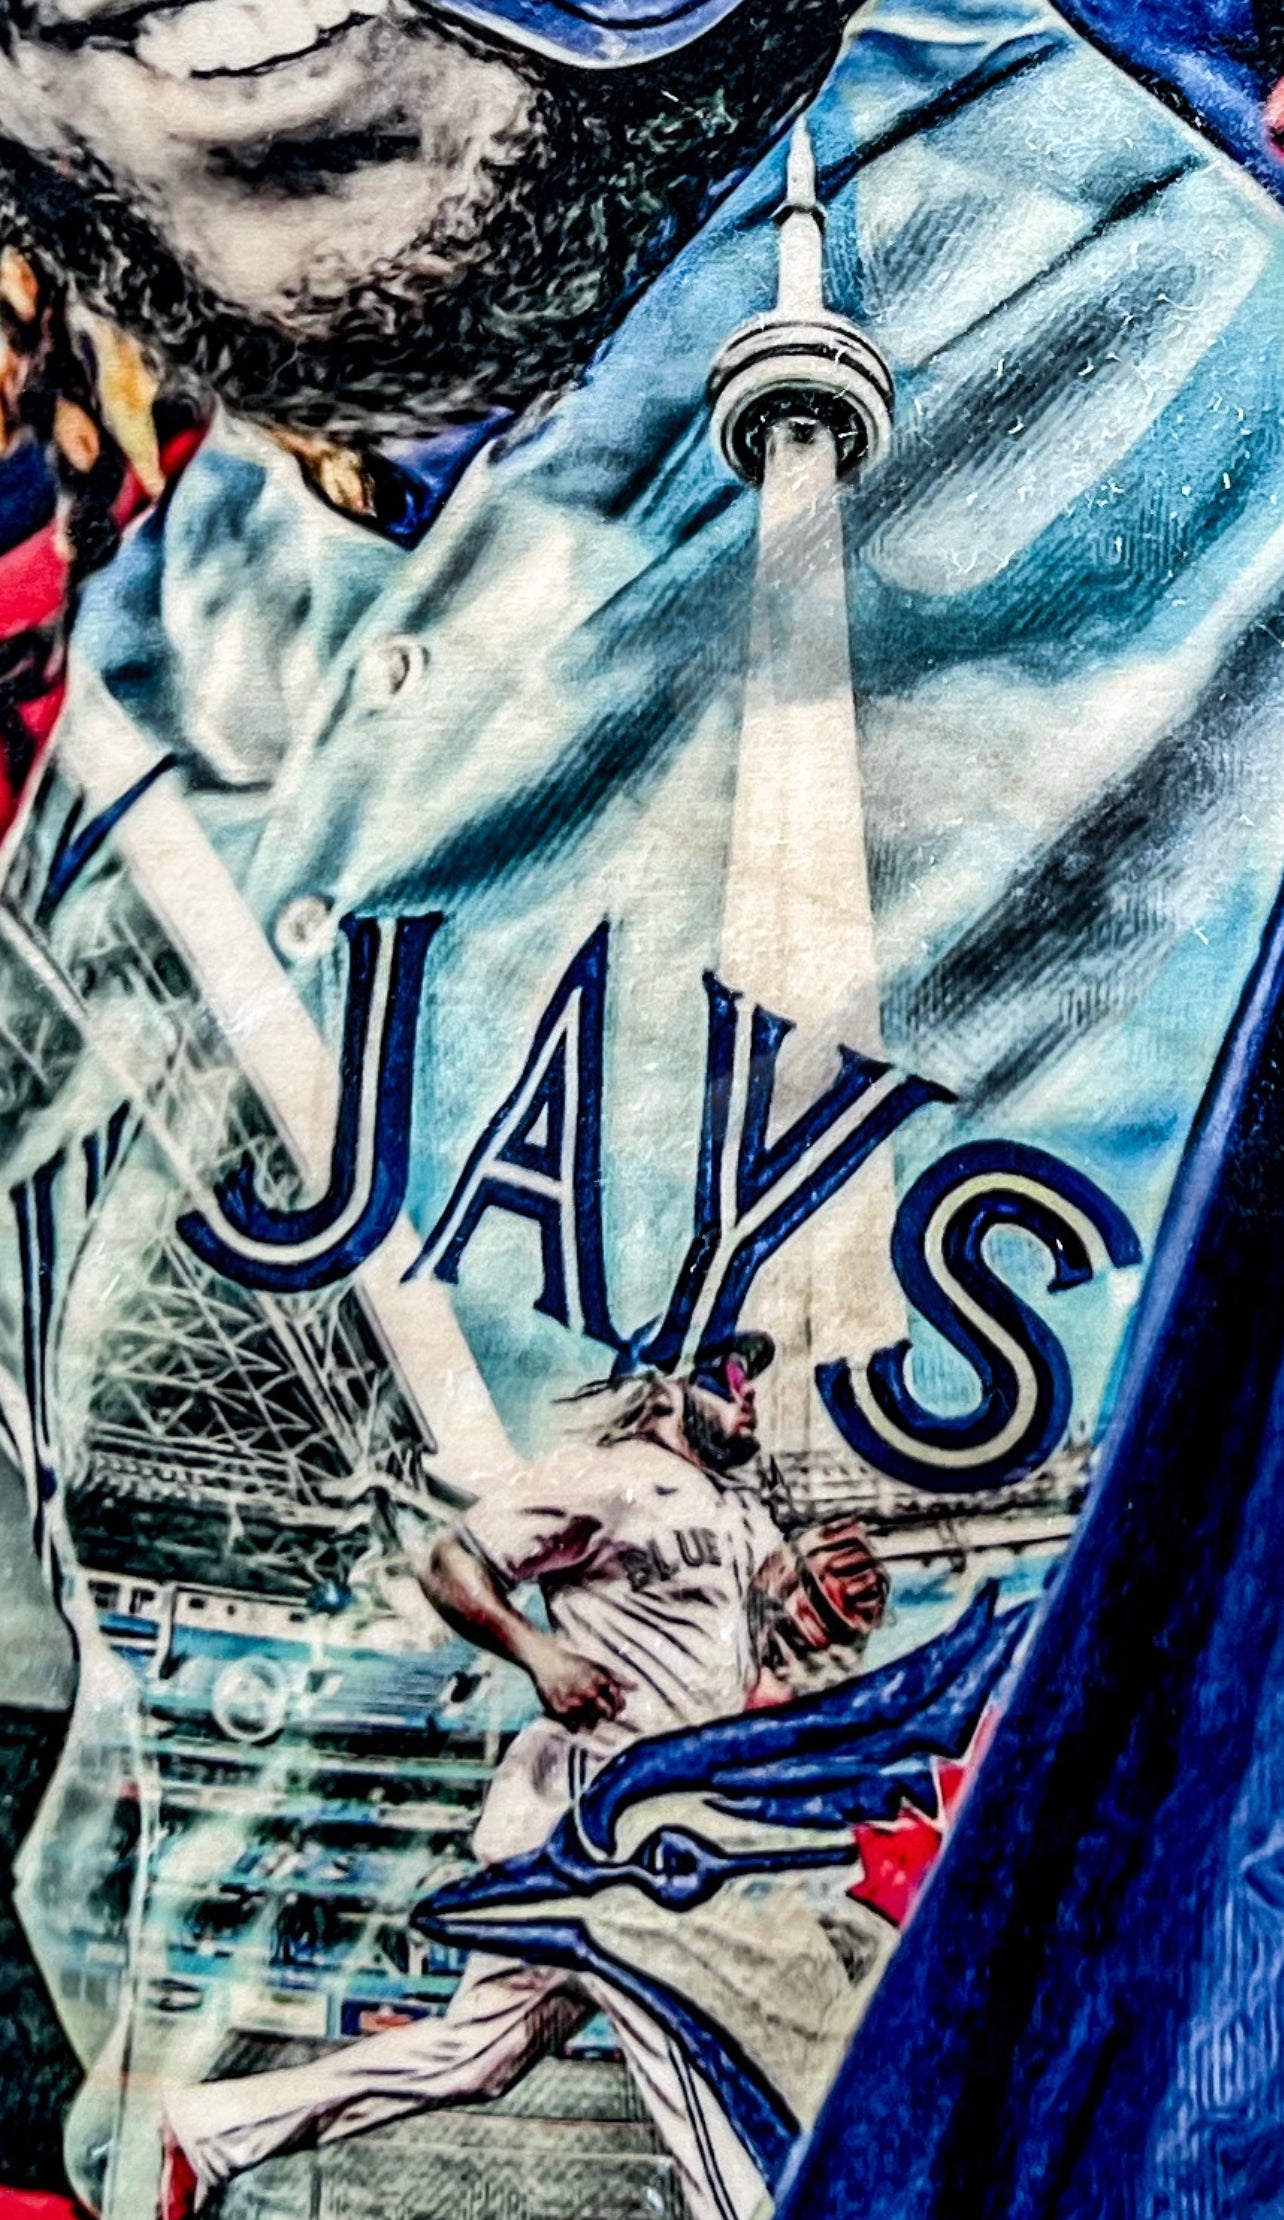 Vladimir Guerrero Jr. Toronto Blue Jays MLB Home Run Derby 2023 Jersey -  Freedomdesign